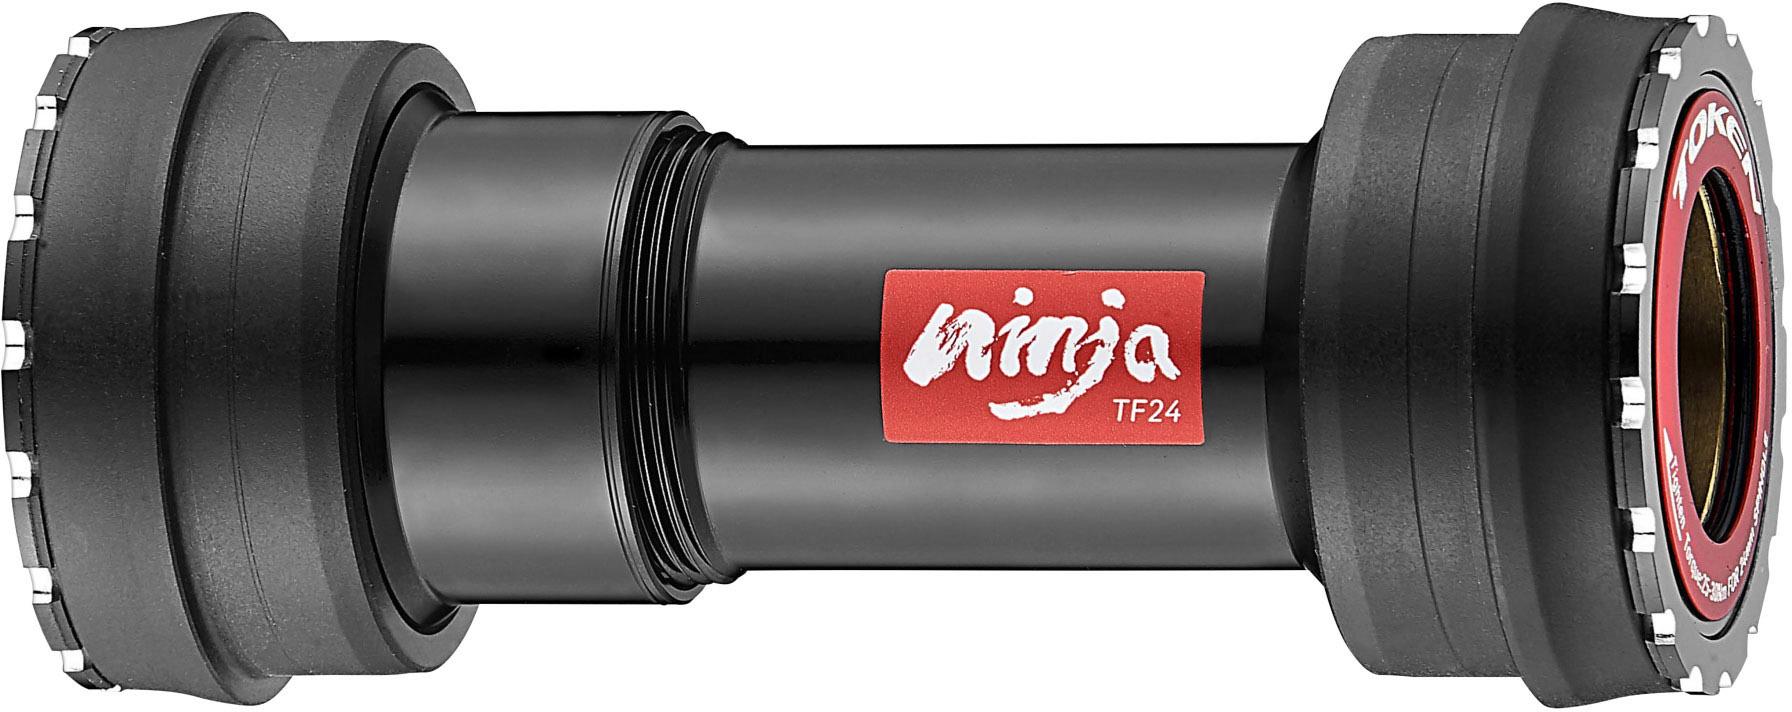 Token Ninja Bb30 Frame Shimano 24mm Bottom Bracket - Black